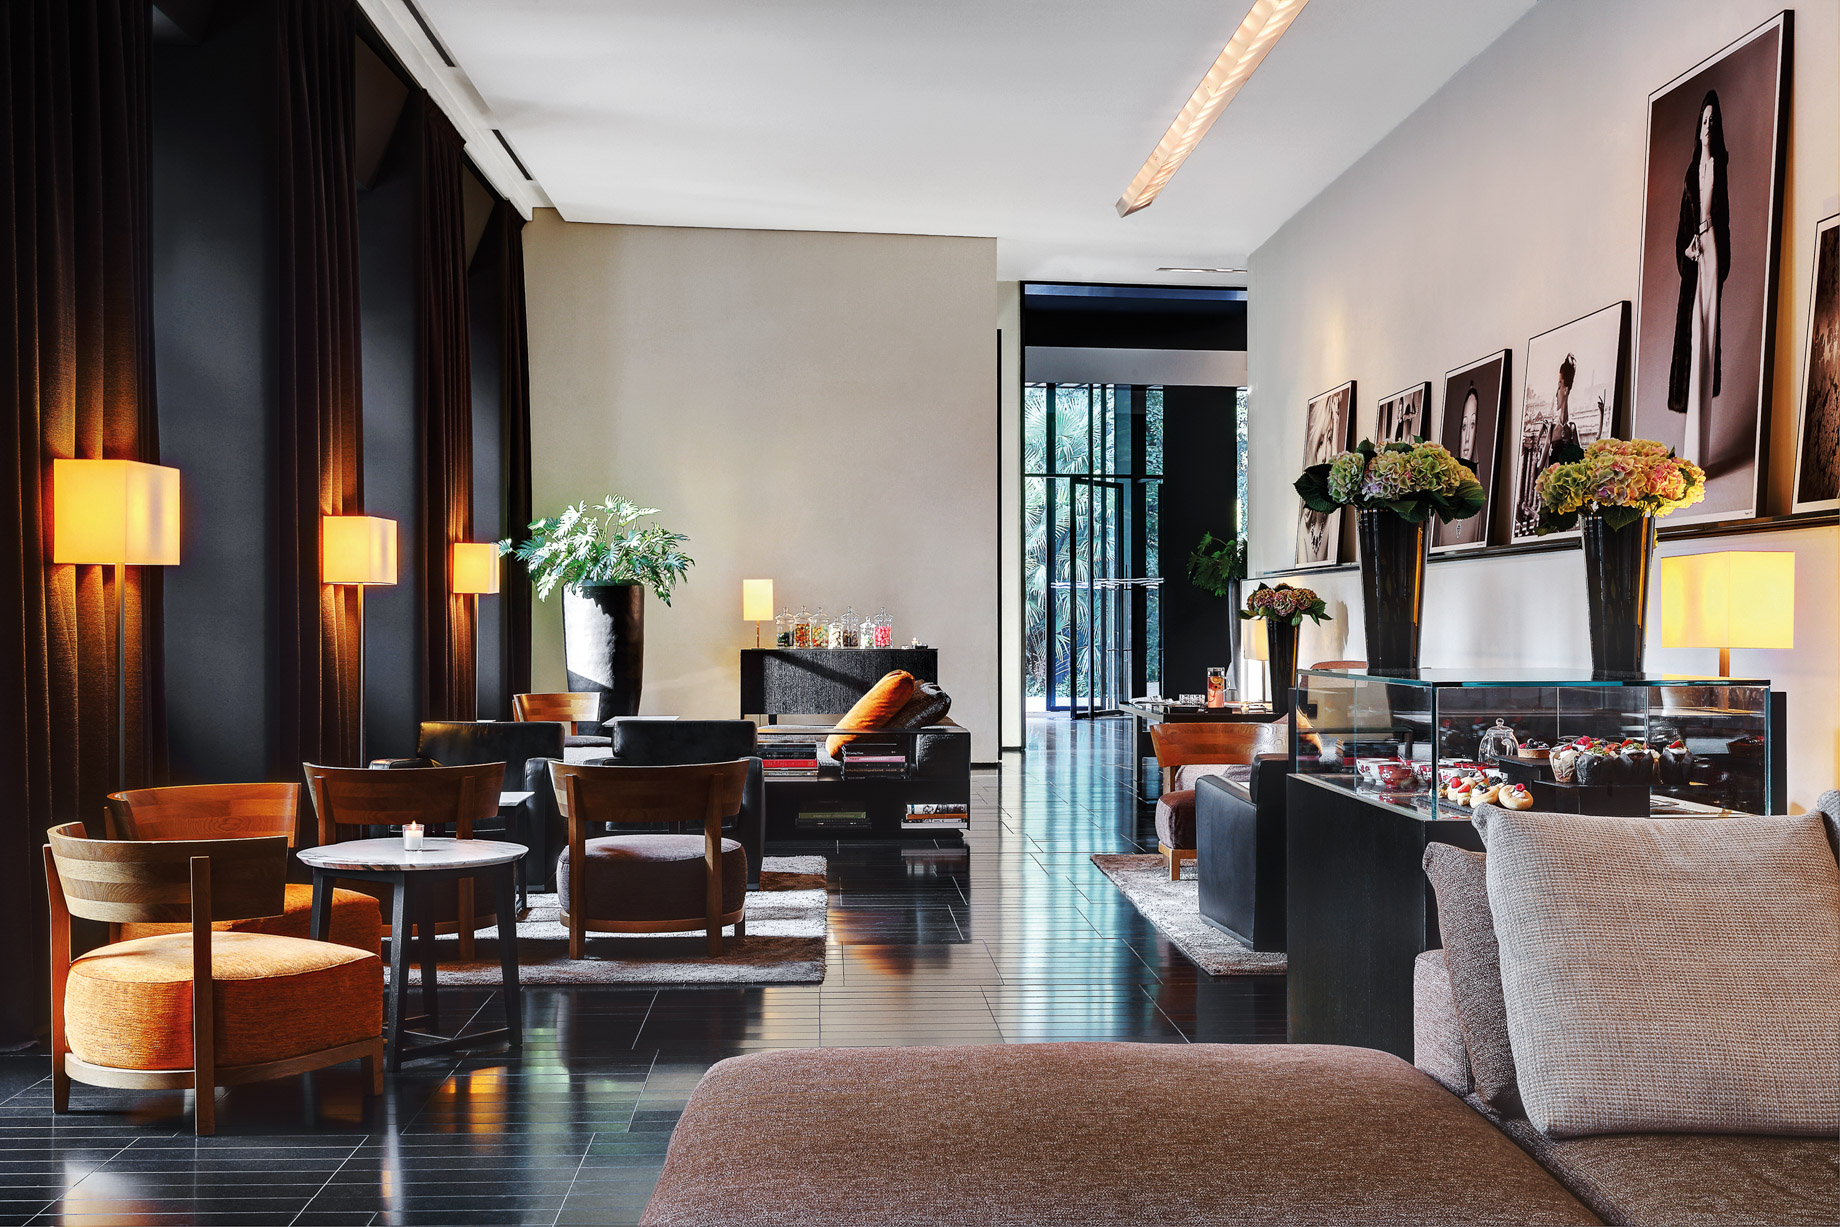 Bvlgari Hotel Milano – Milan, Italy – Lobby Lounge